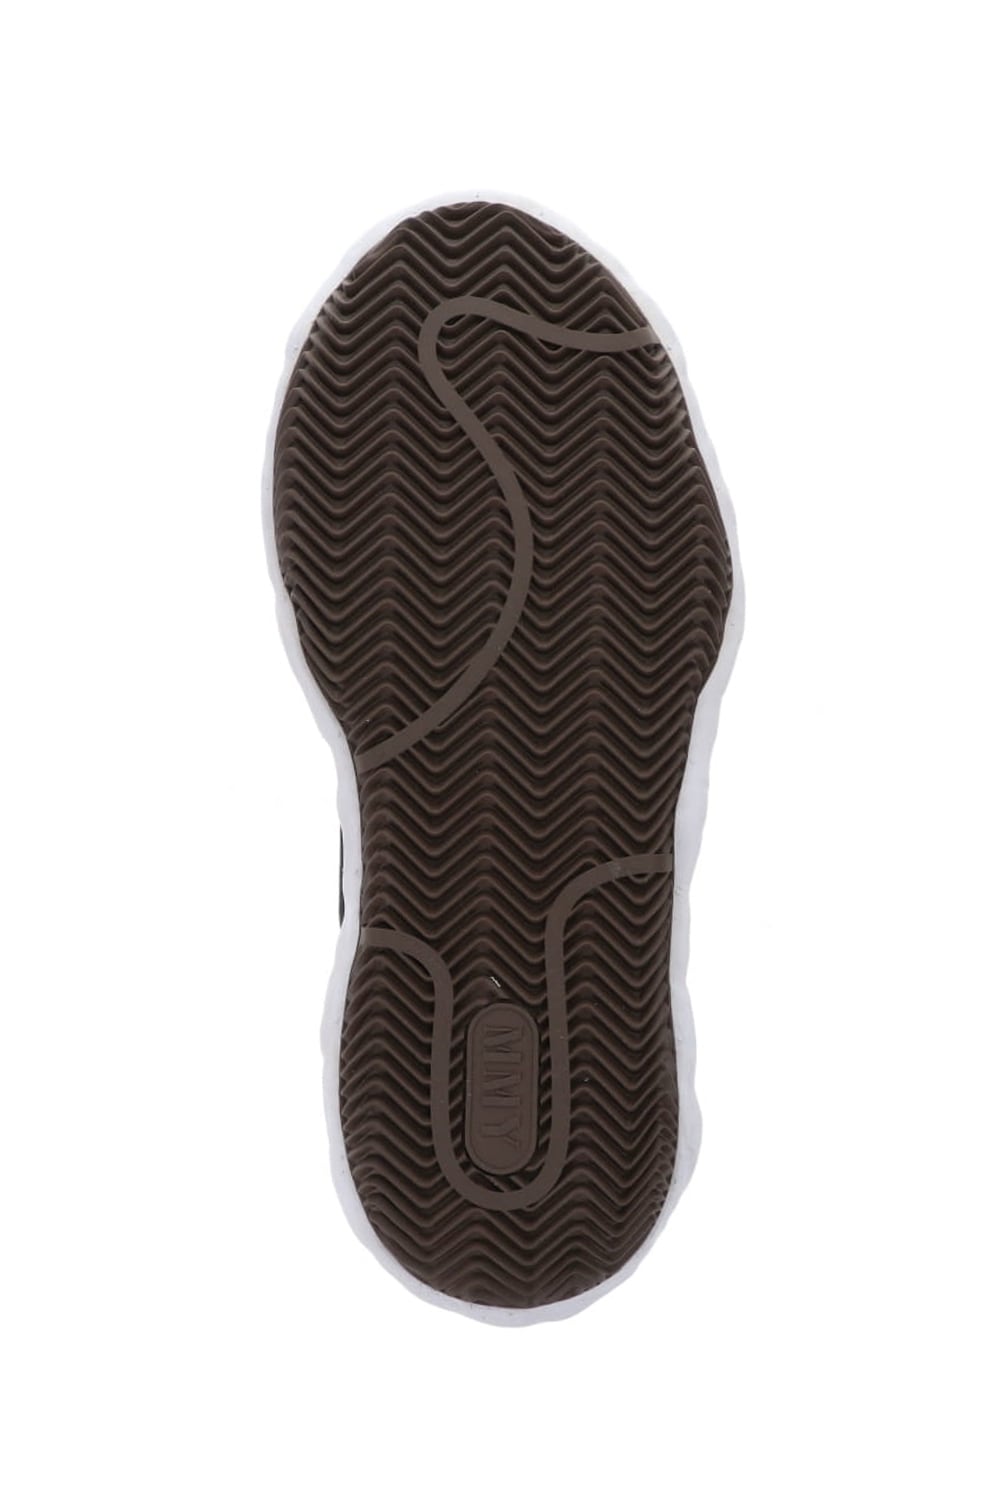 -BLAKEY High- Original STC sole canvas Hi-top sneakers Black